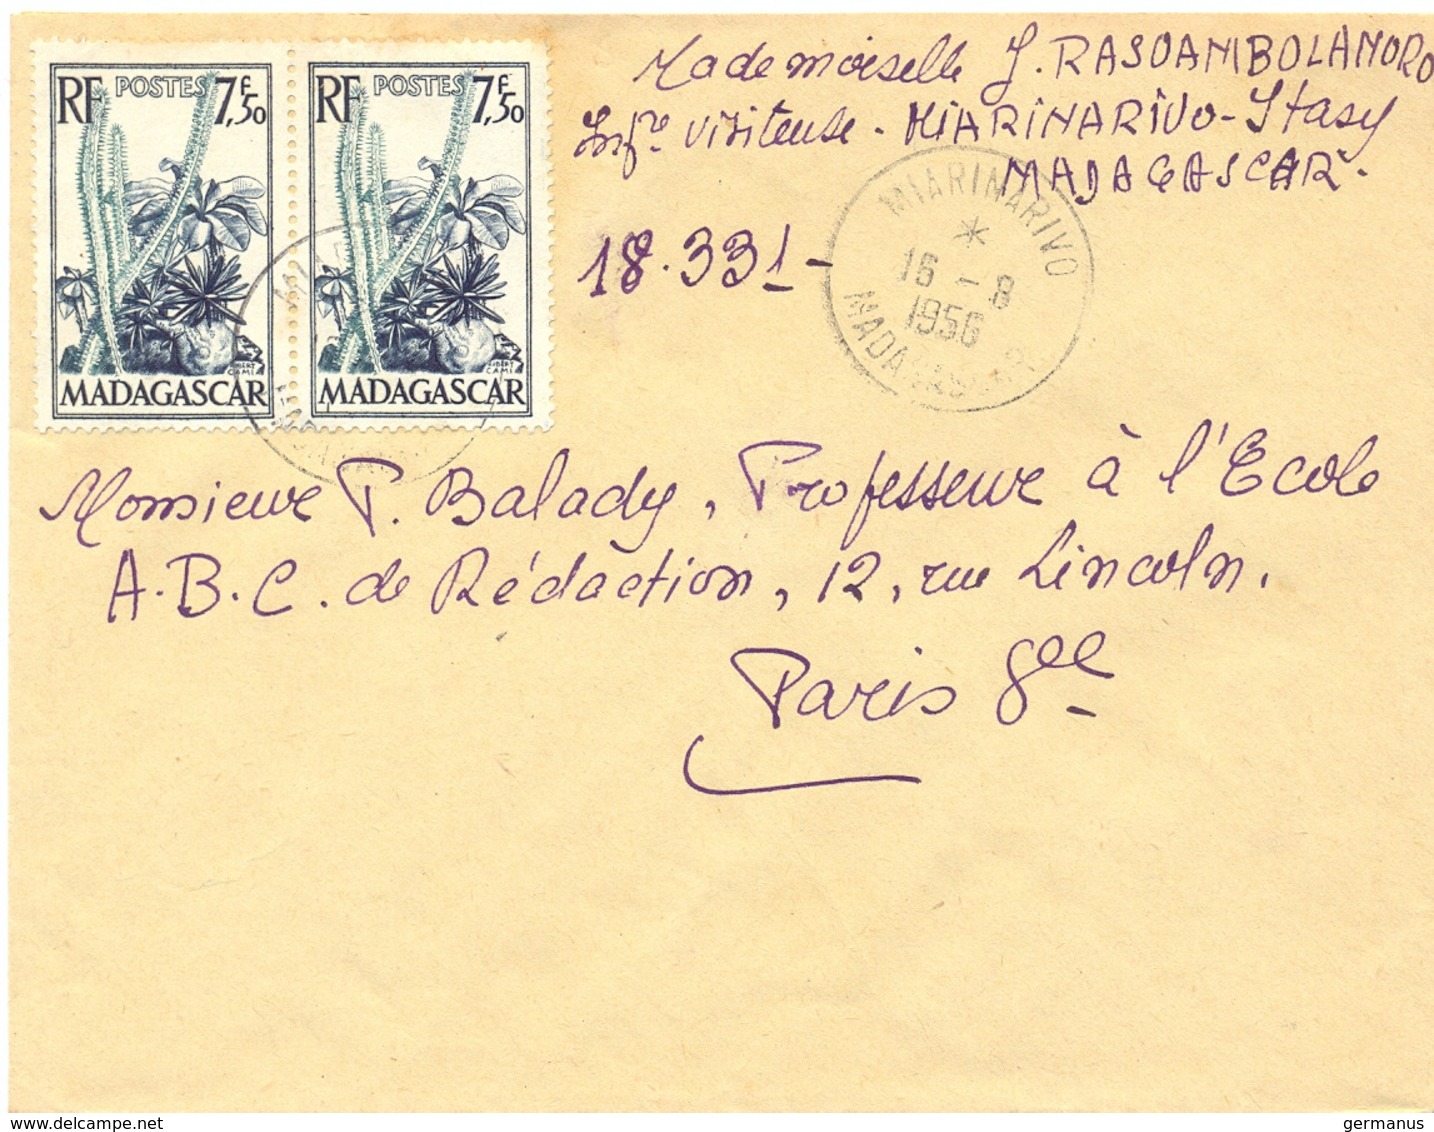 MADAGASCAR MIARINARIVO TàD 16-8-1956 - Lettres & Documents